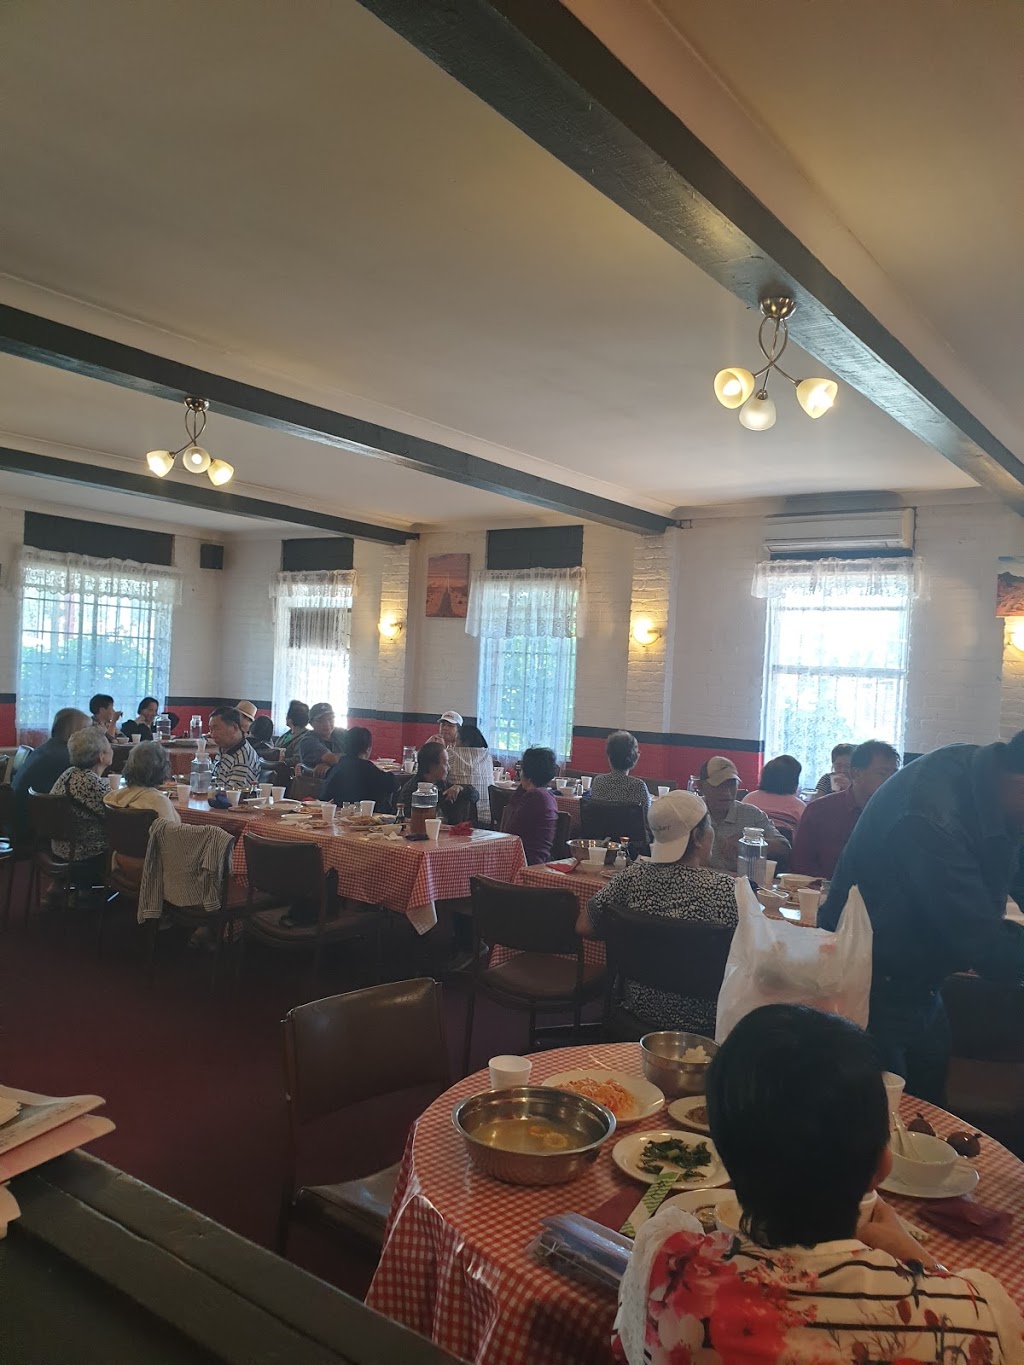 Jin Li Feng chinese restaurant | 51 Sydney Rd, Kelso NSW 2795, Australia | Phone: (02) 6331 3915